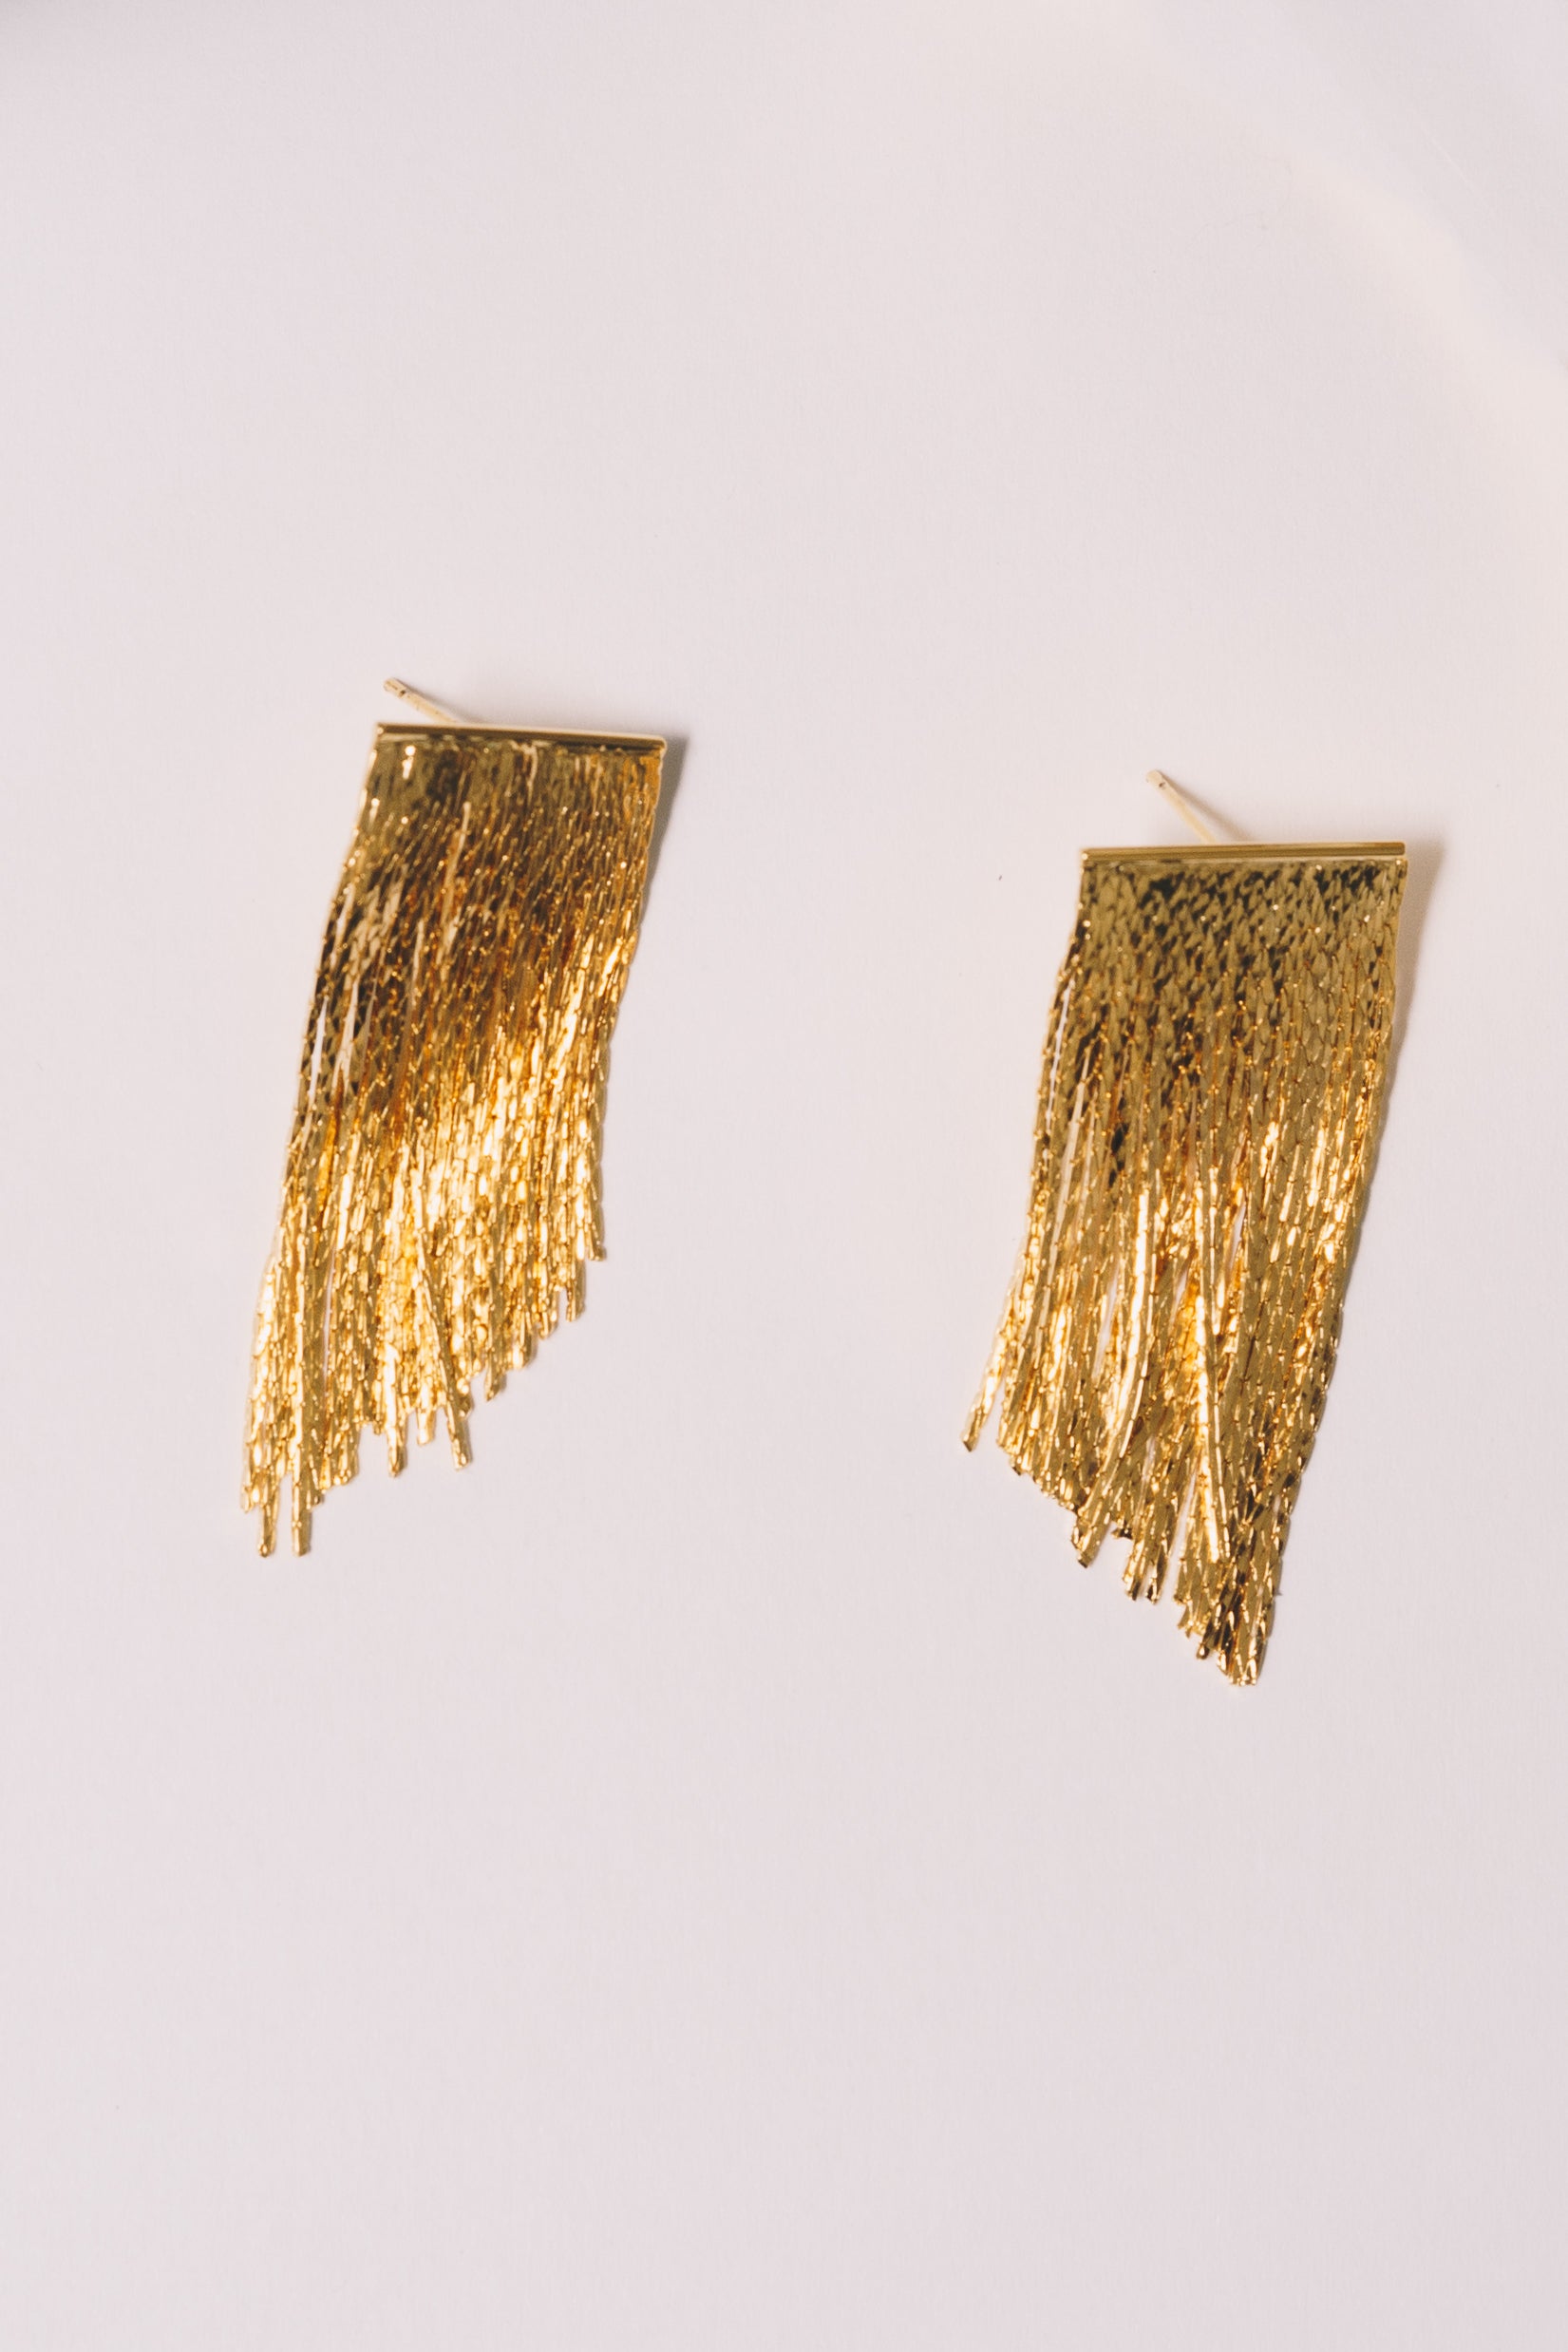 gold fringe stud earrings showing post backings